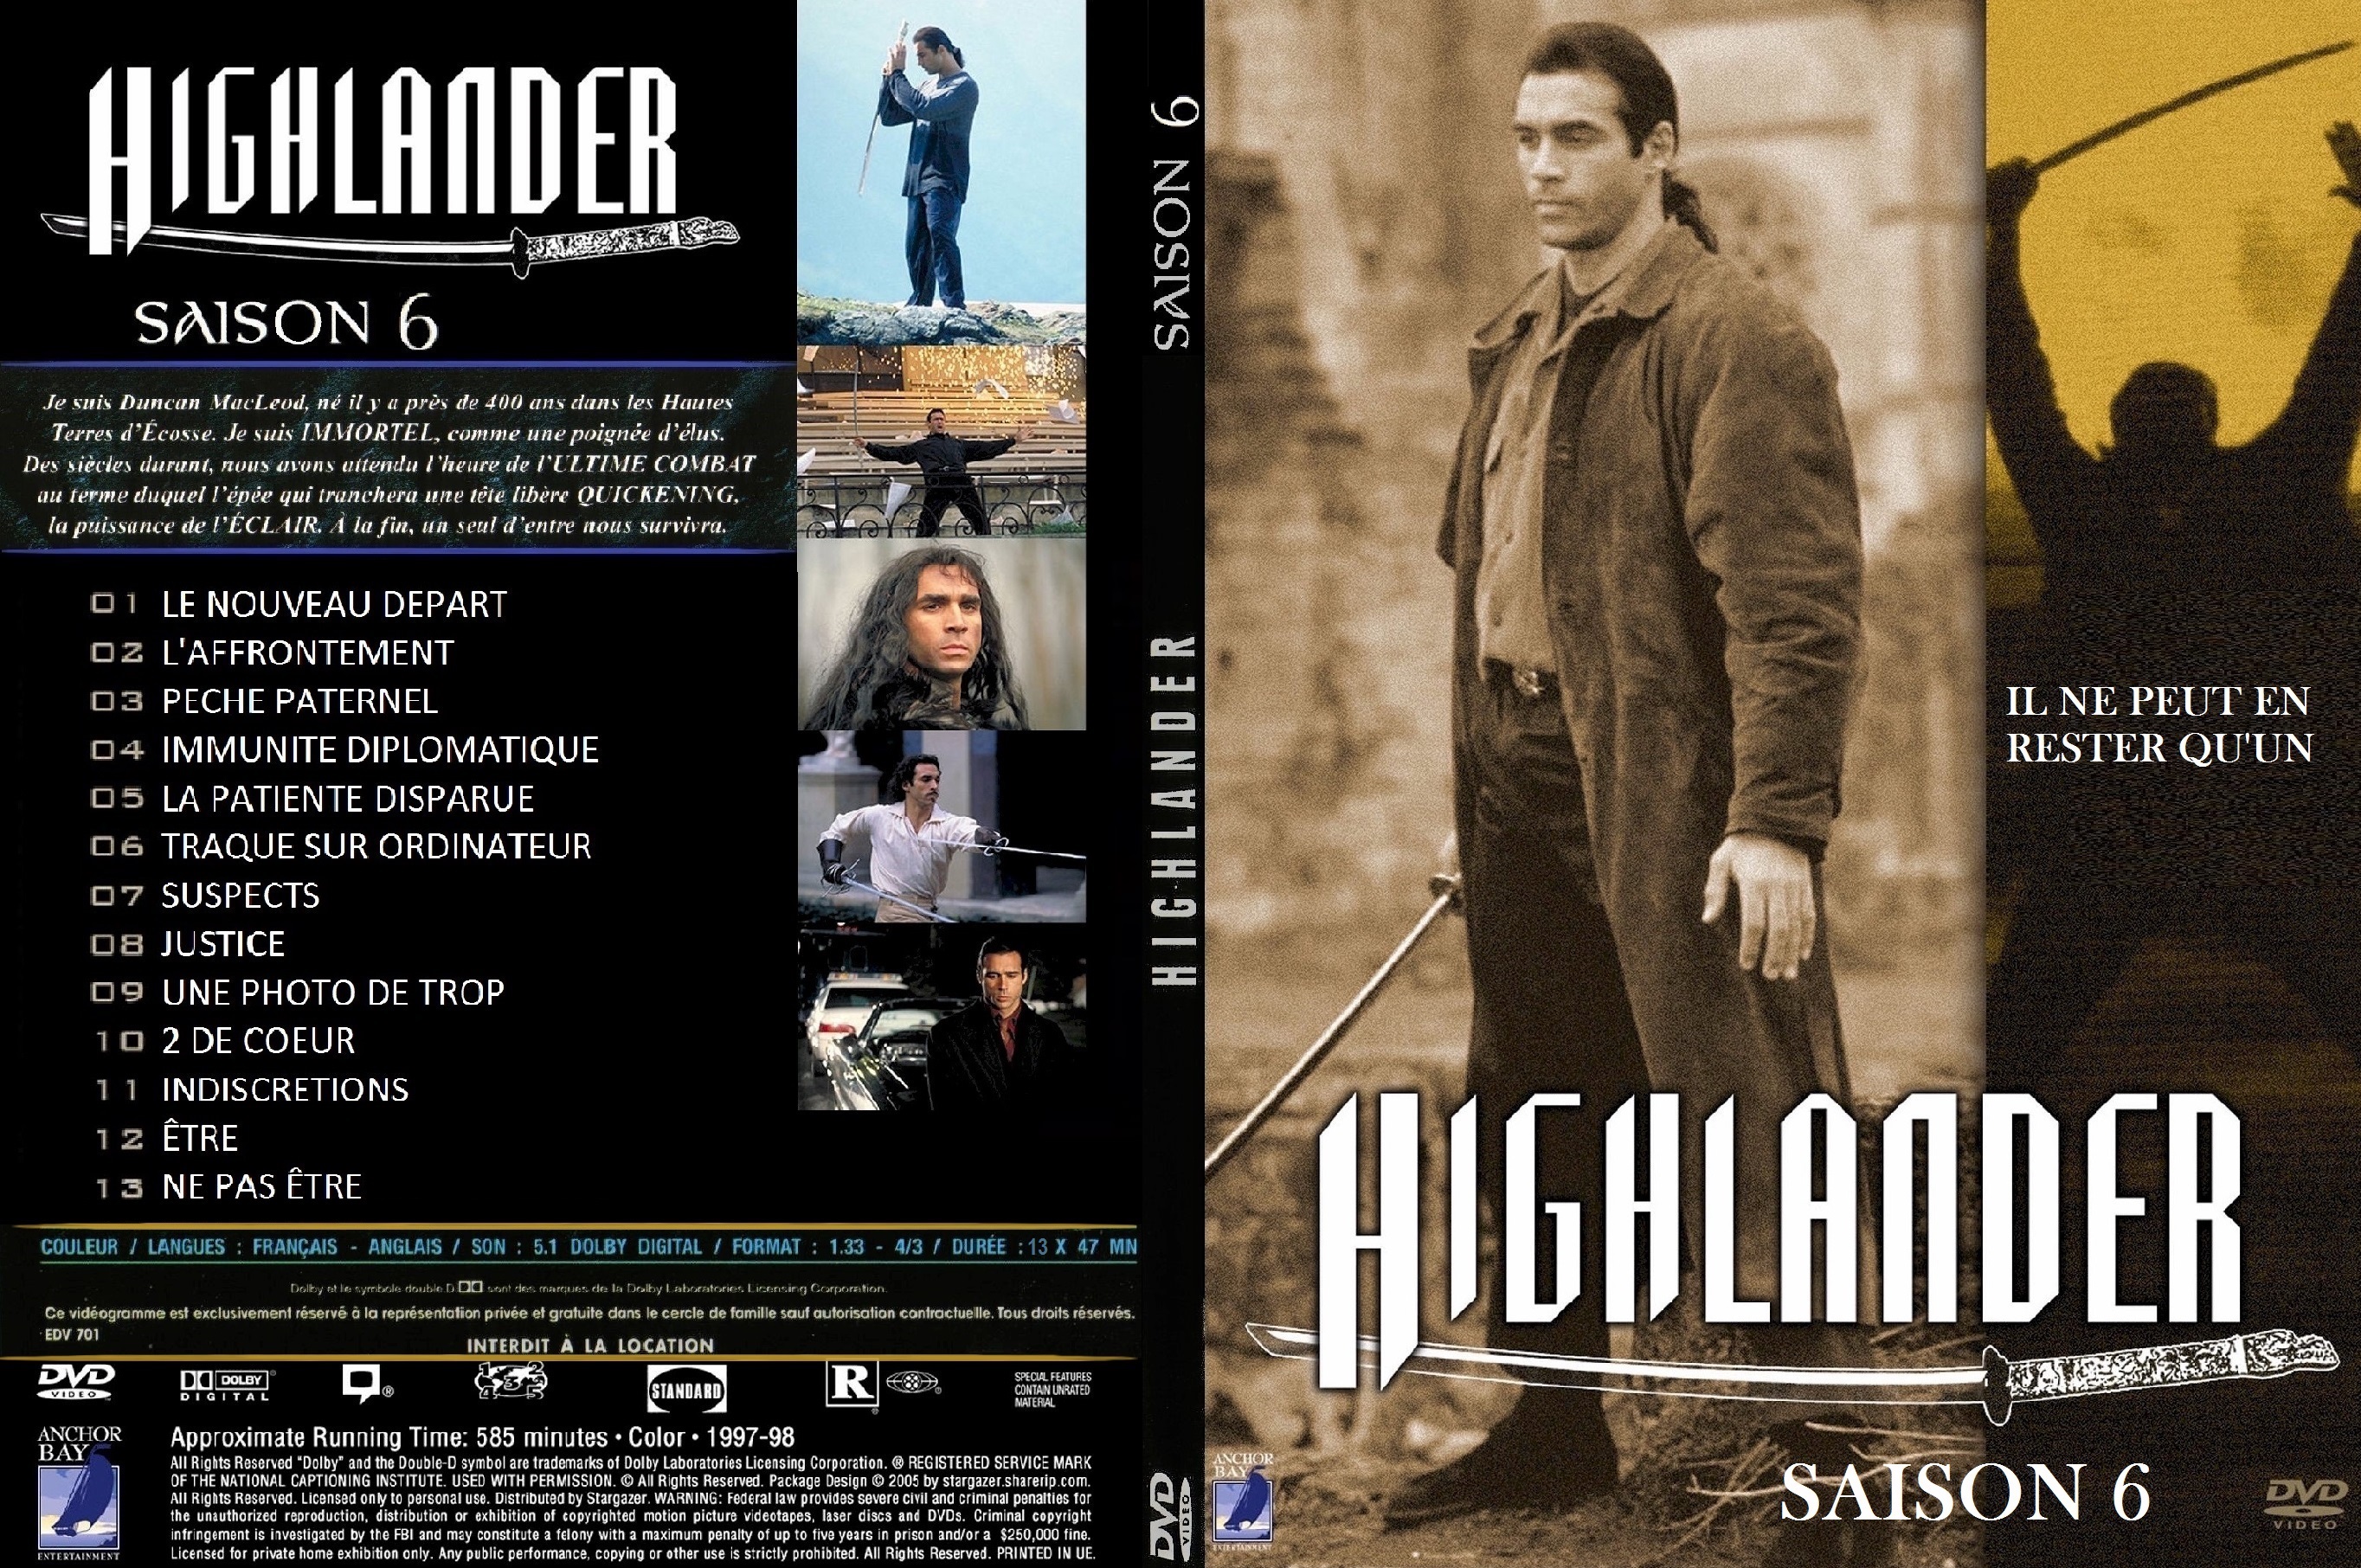 Jaquette DVD Highlander saison 6 SLIM custom